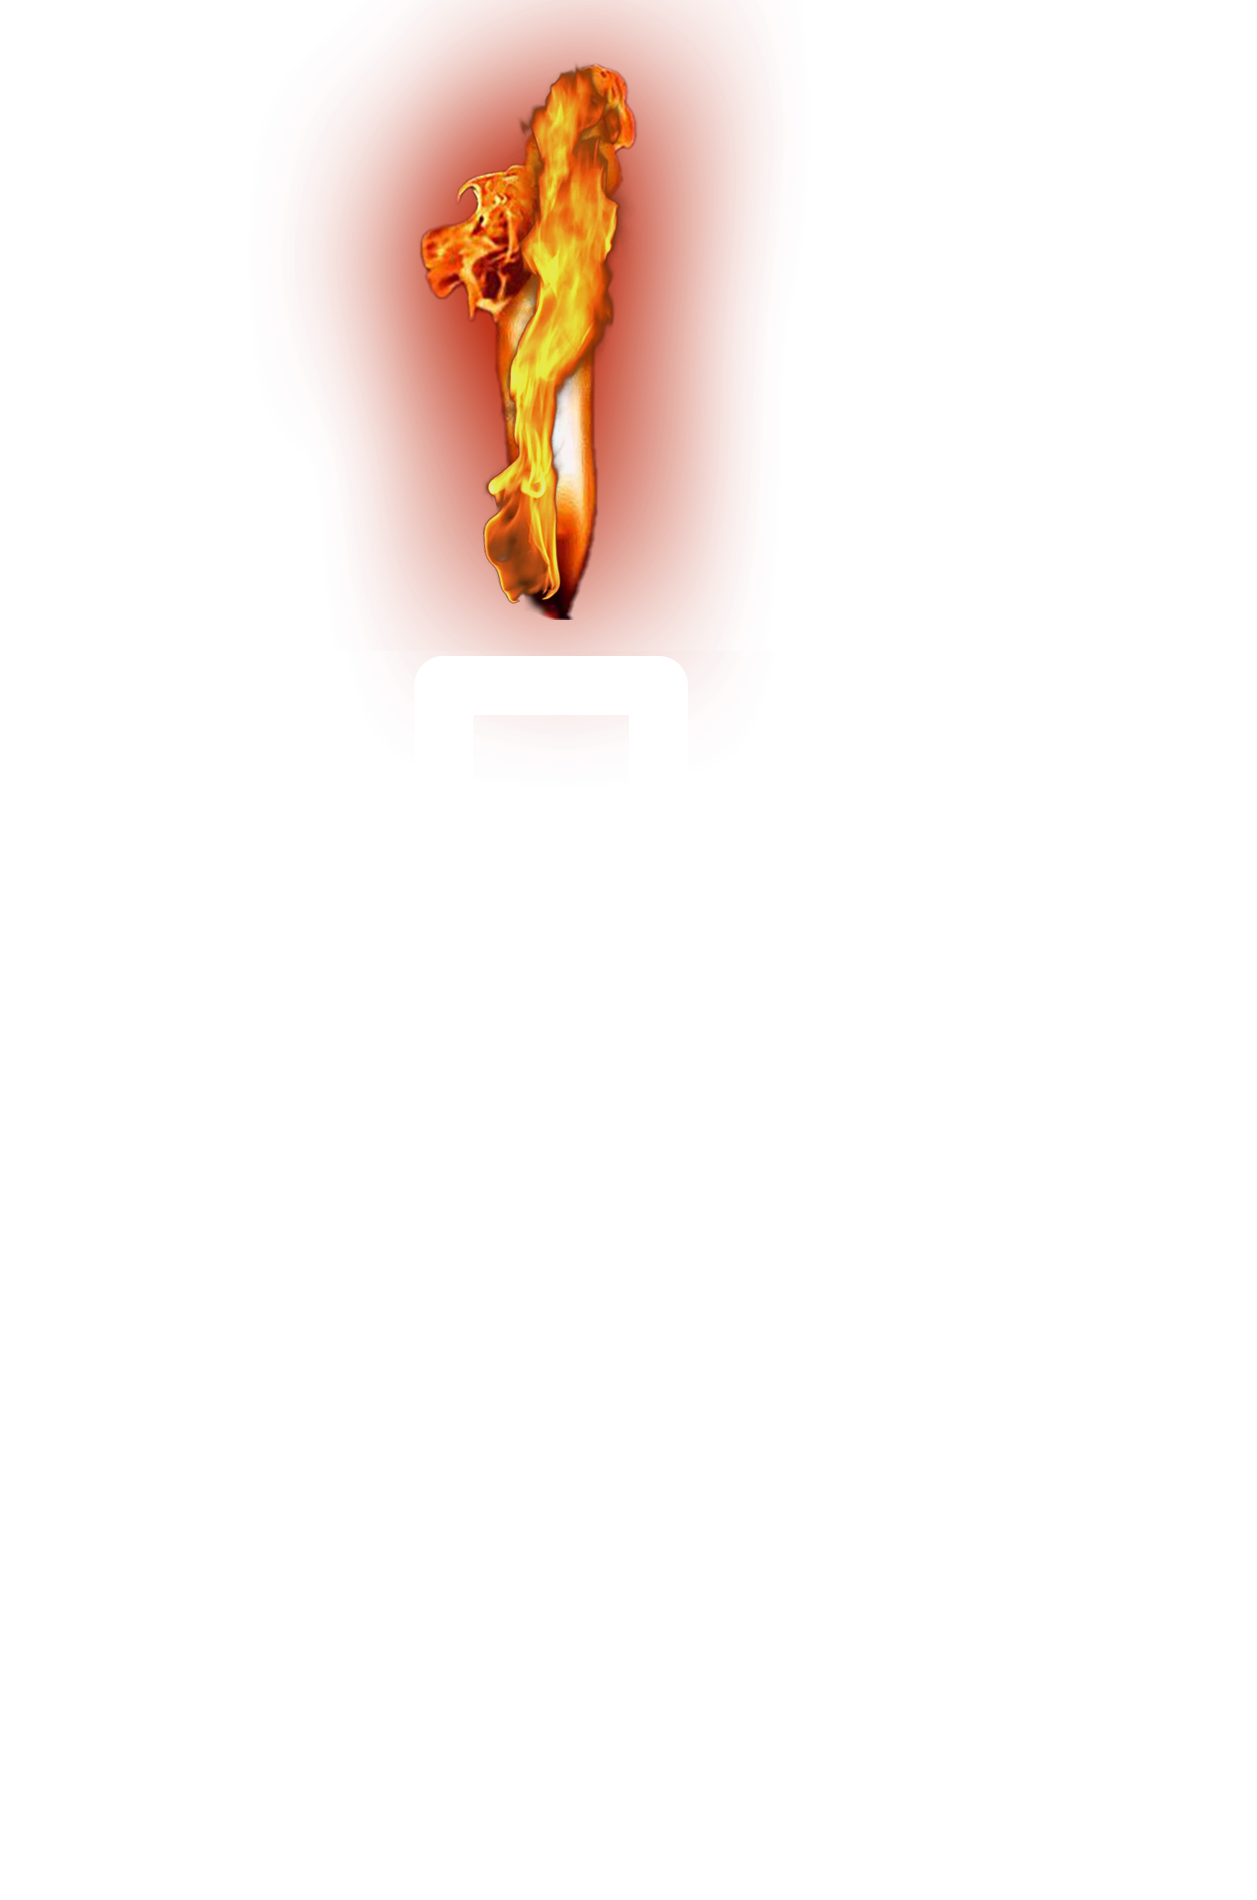 Icon of Bunsen burner with orange flame